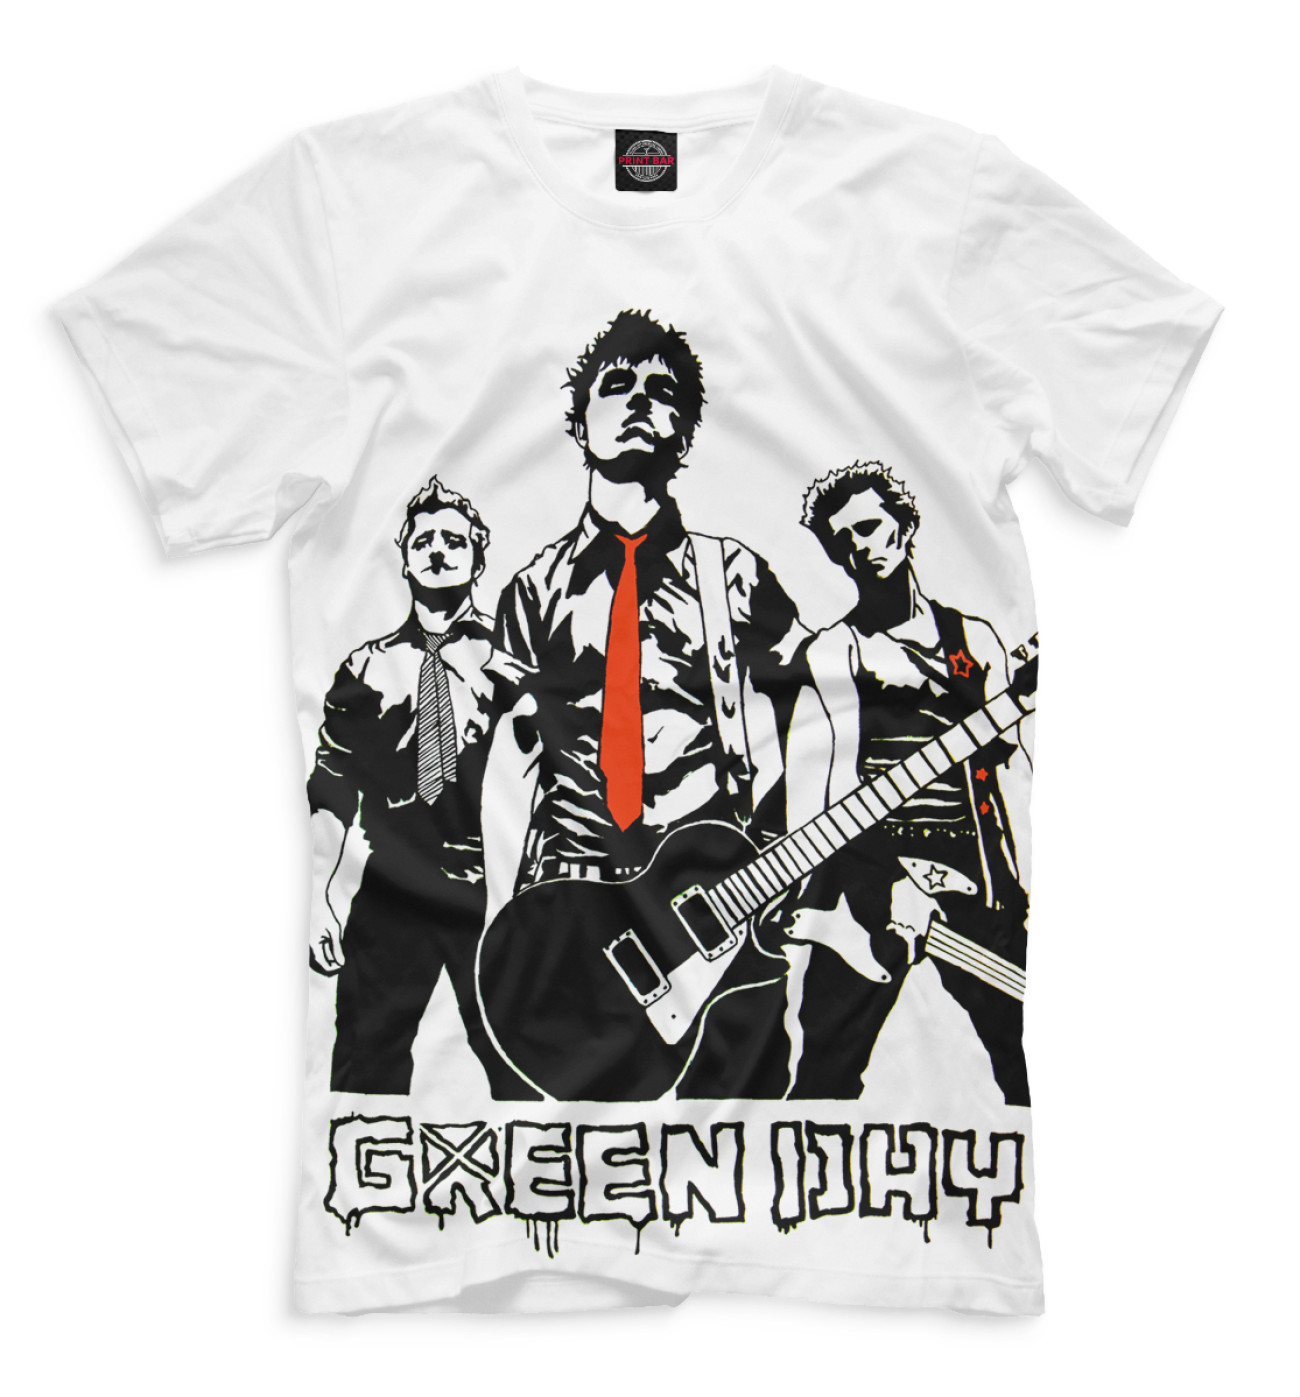 Мужская Футболка Green Day, артикул: GRE-699124-fut-2